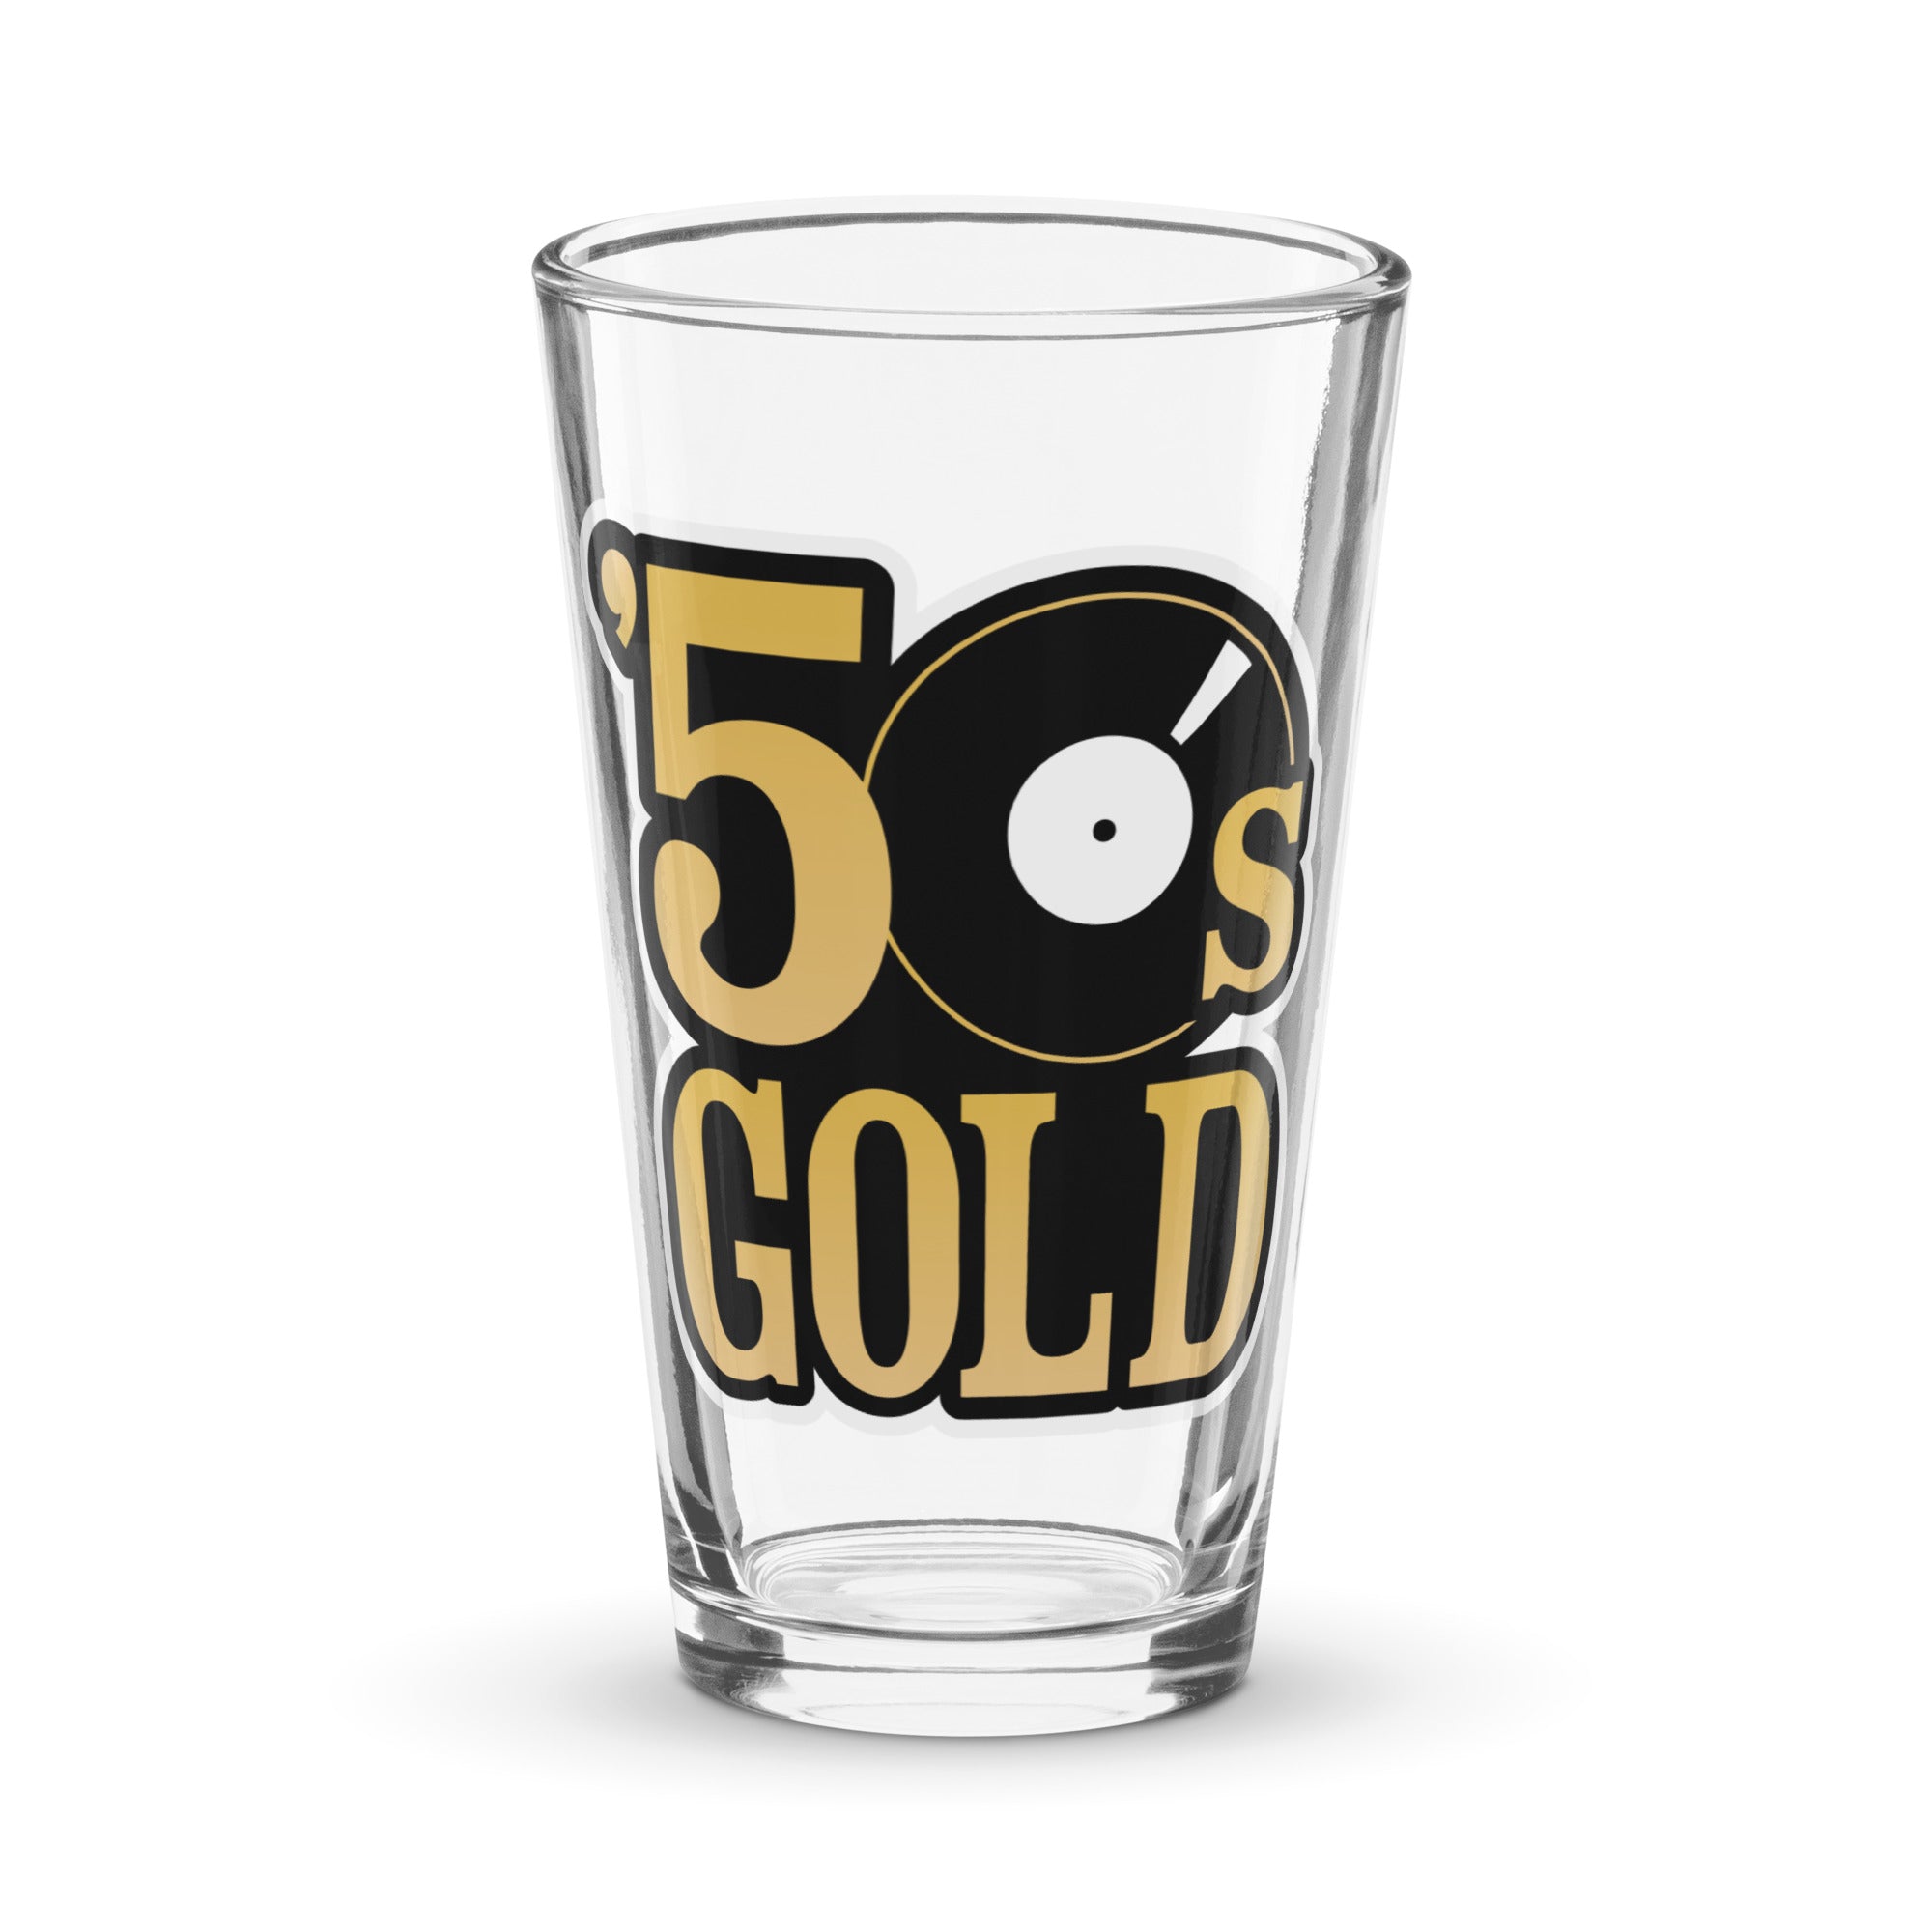 50s Gold: Pint Glass